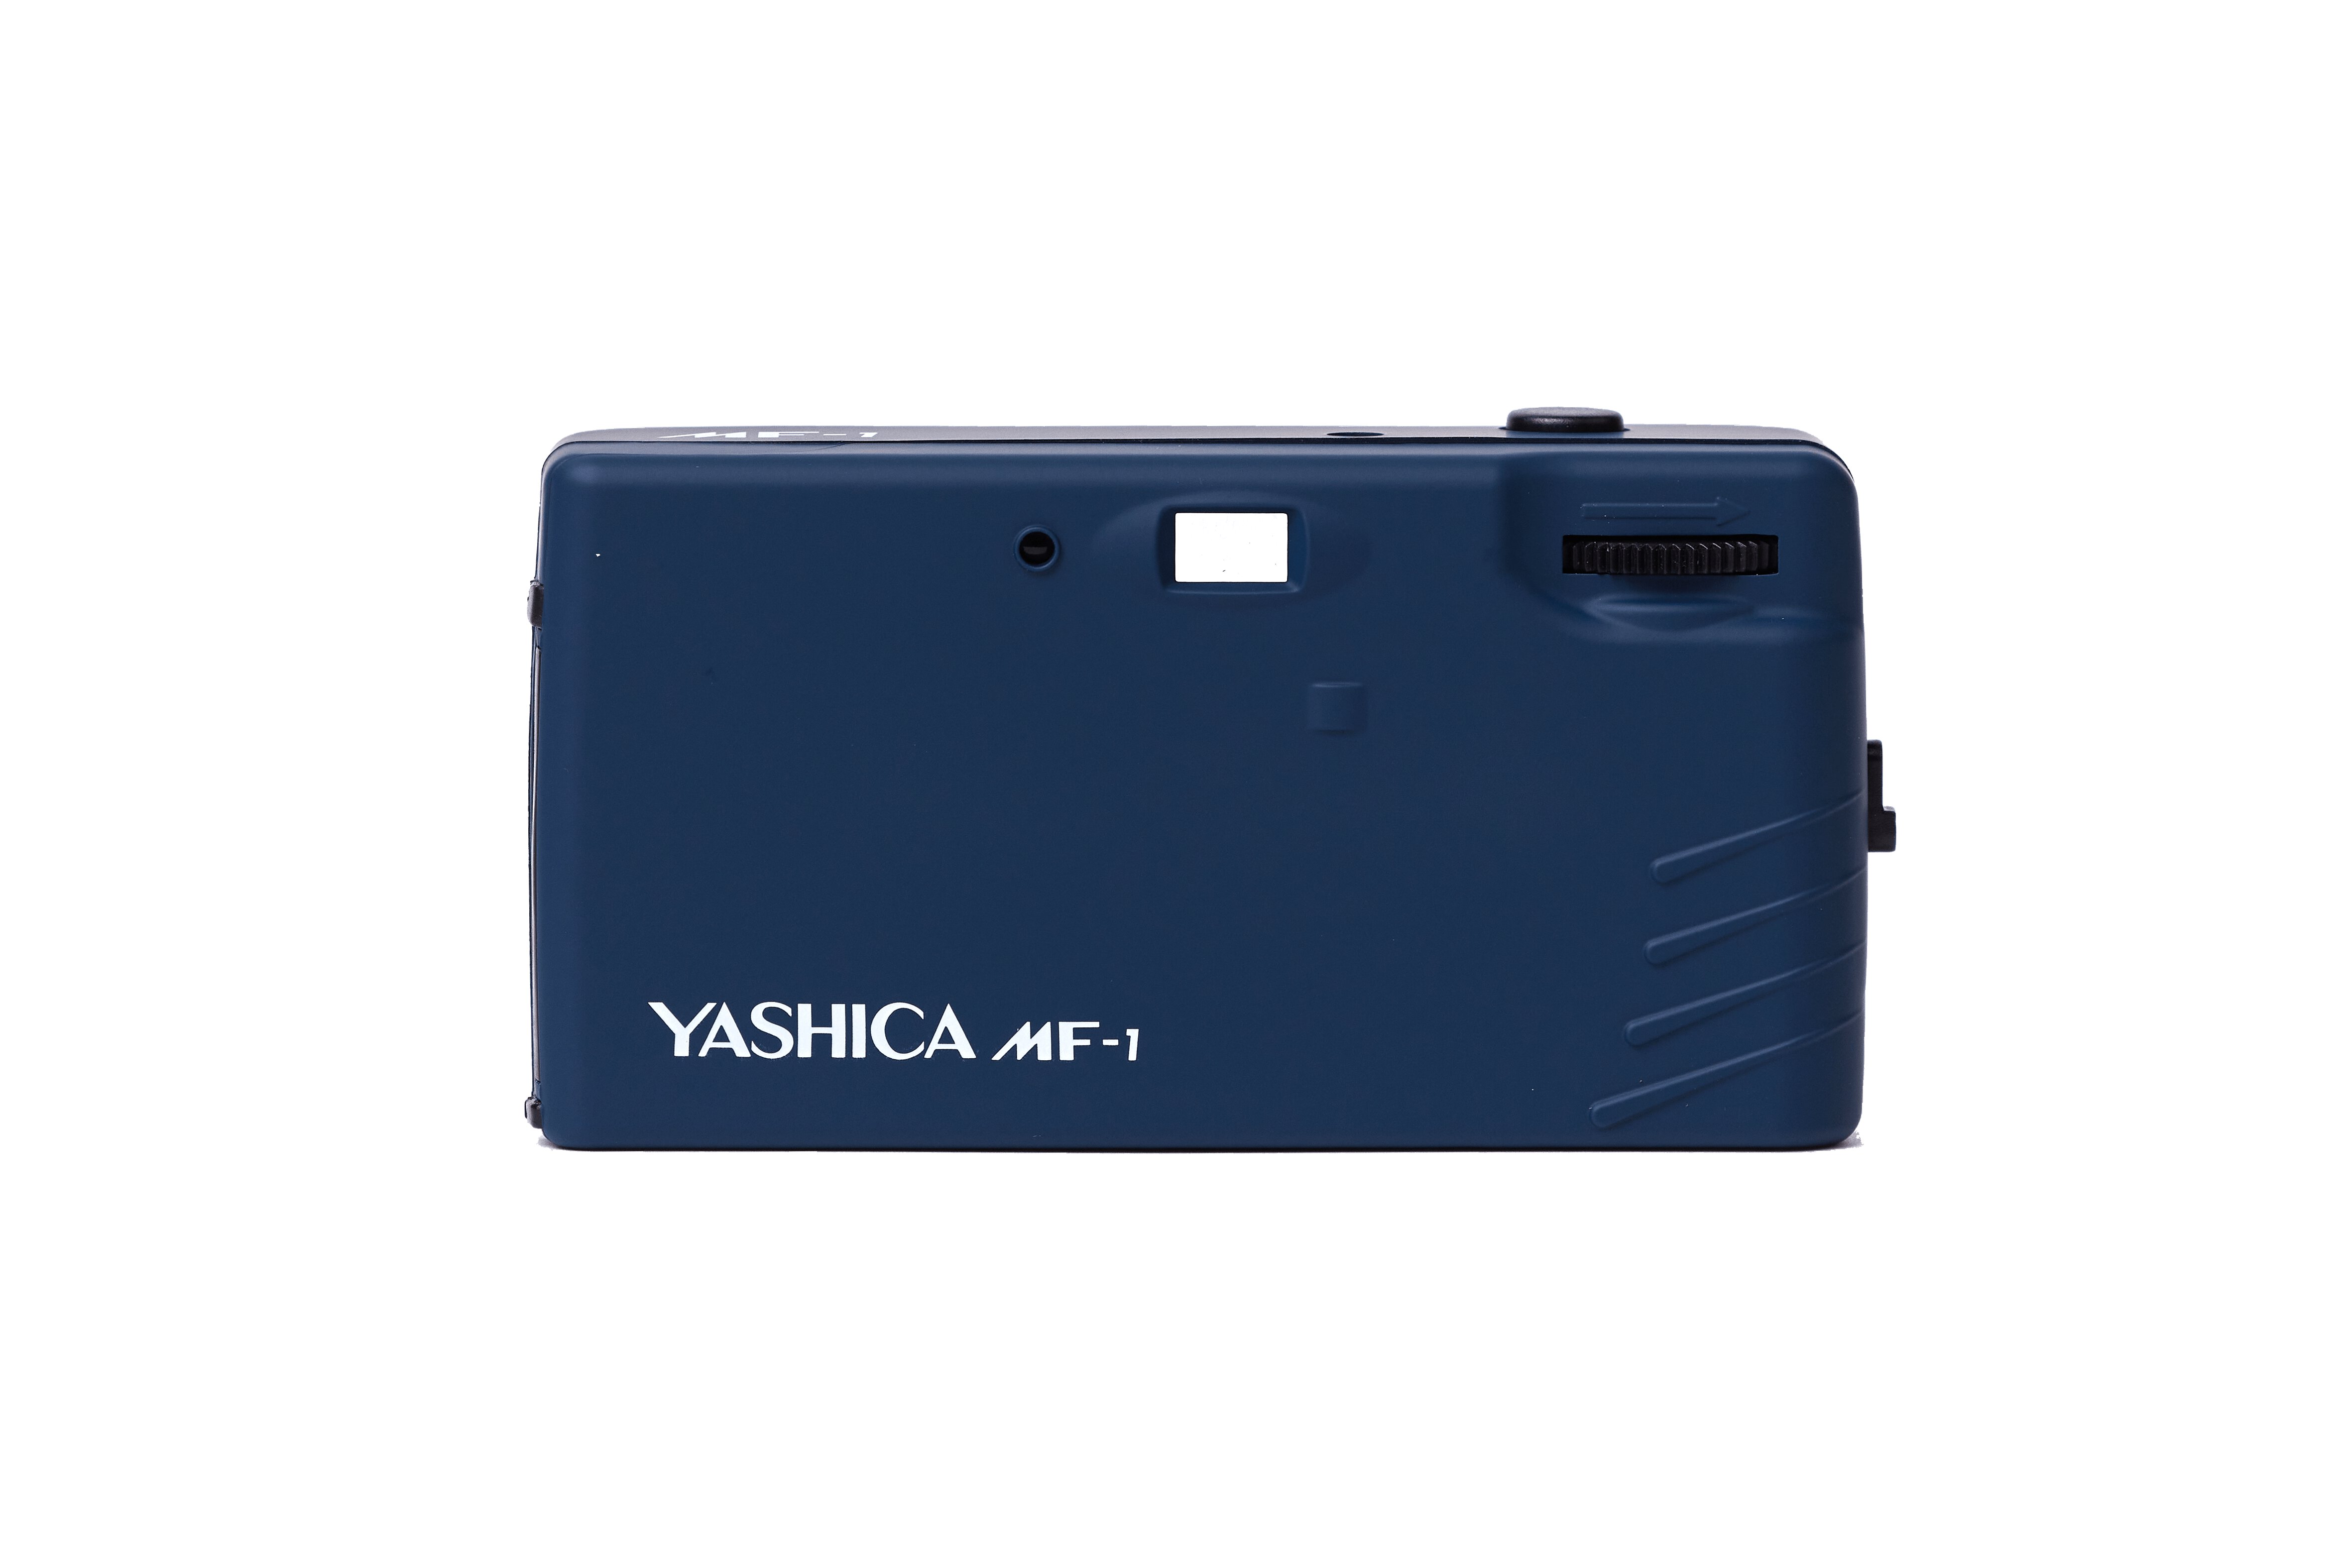 Yashica MF-1 dunkel blau